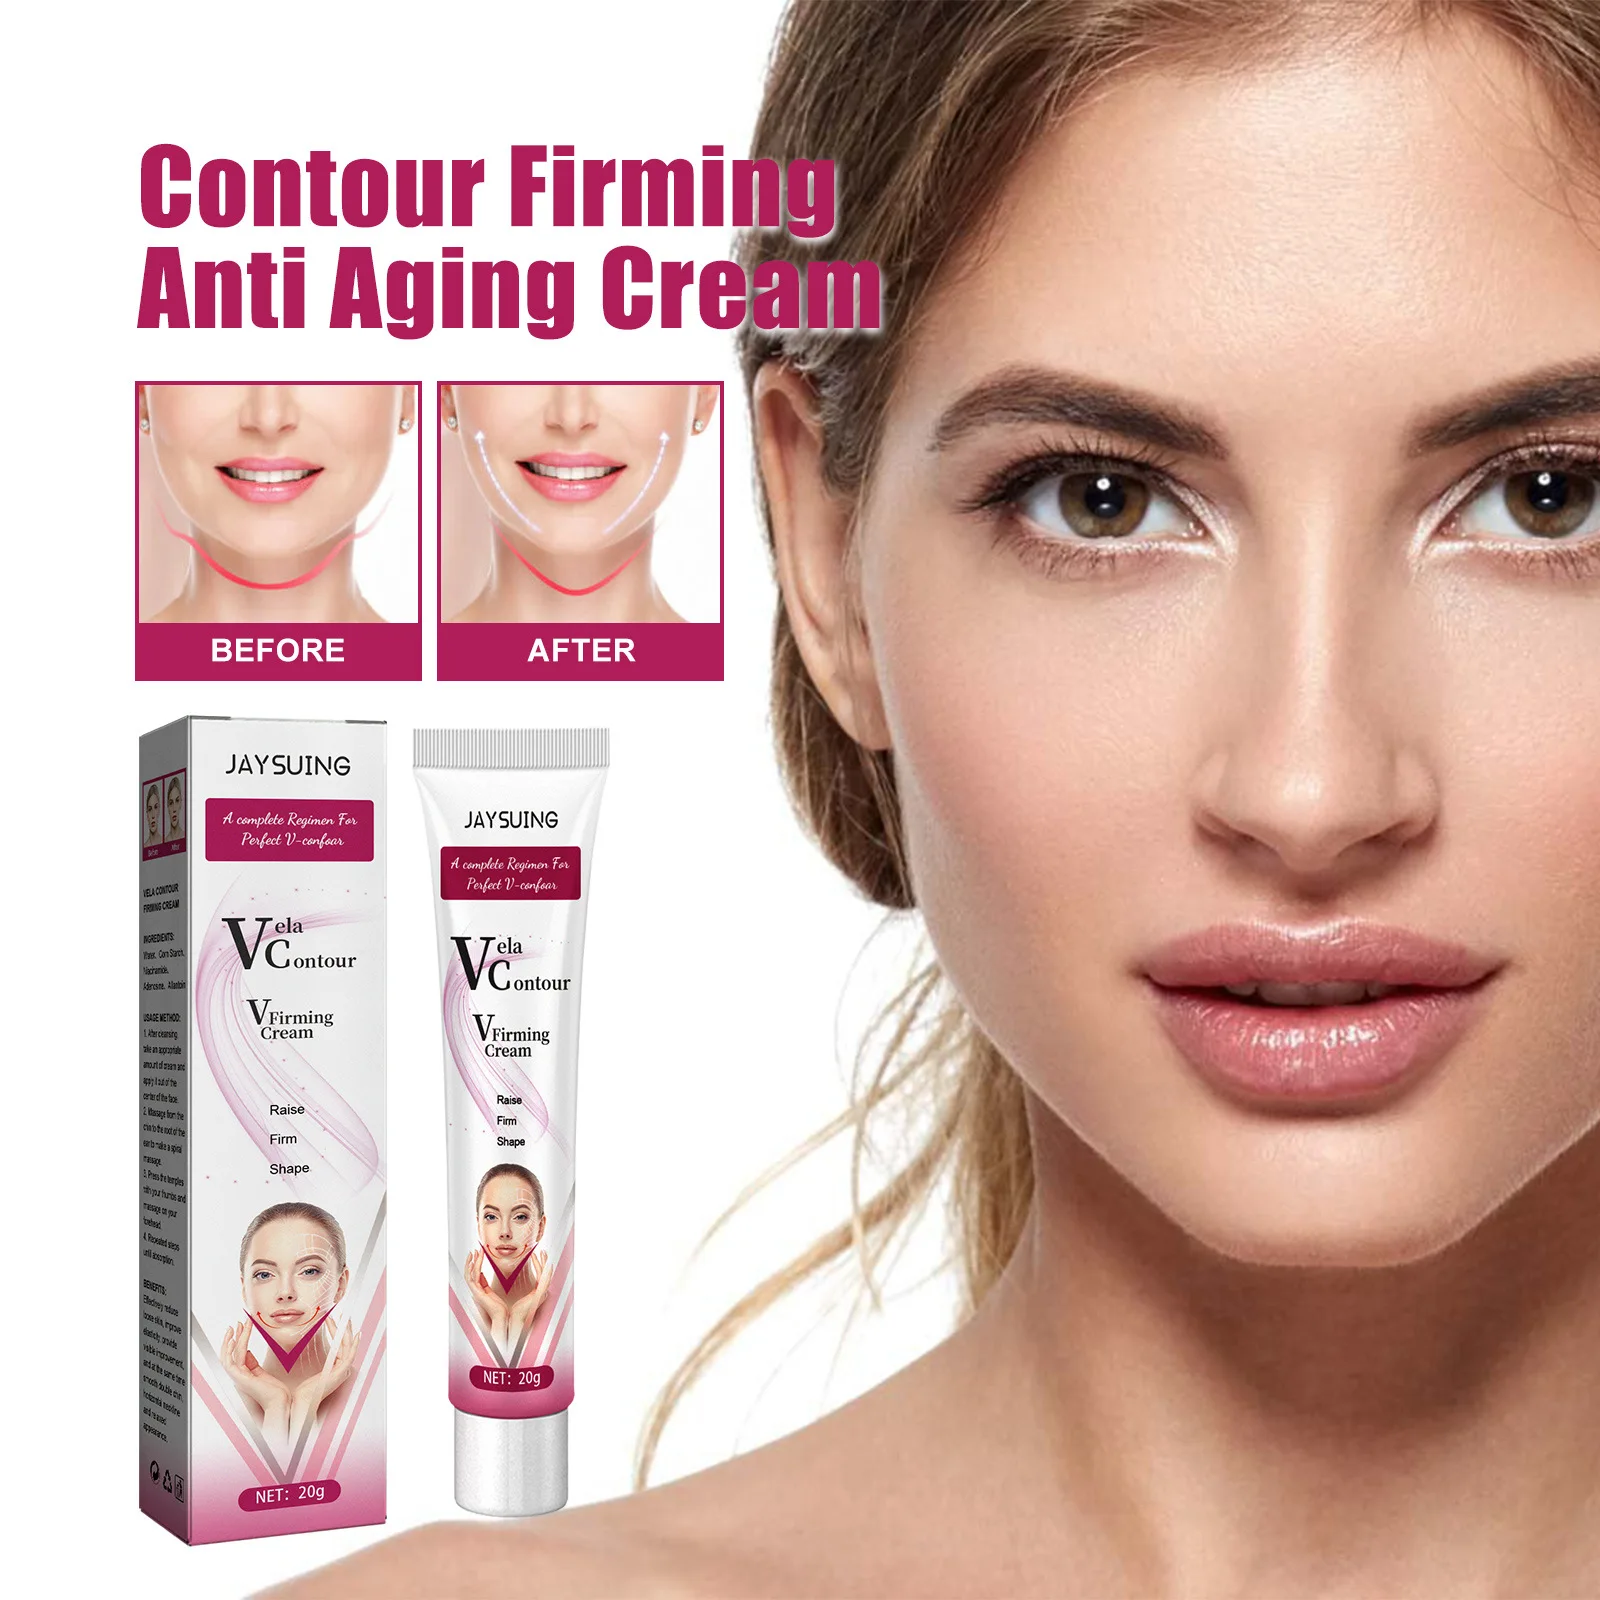 

V Face Firming cream Anti-aging cream big face double chin jaw bone firming lift facial contour